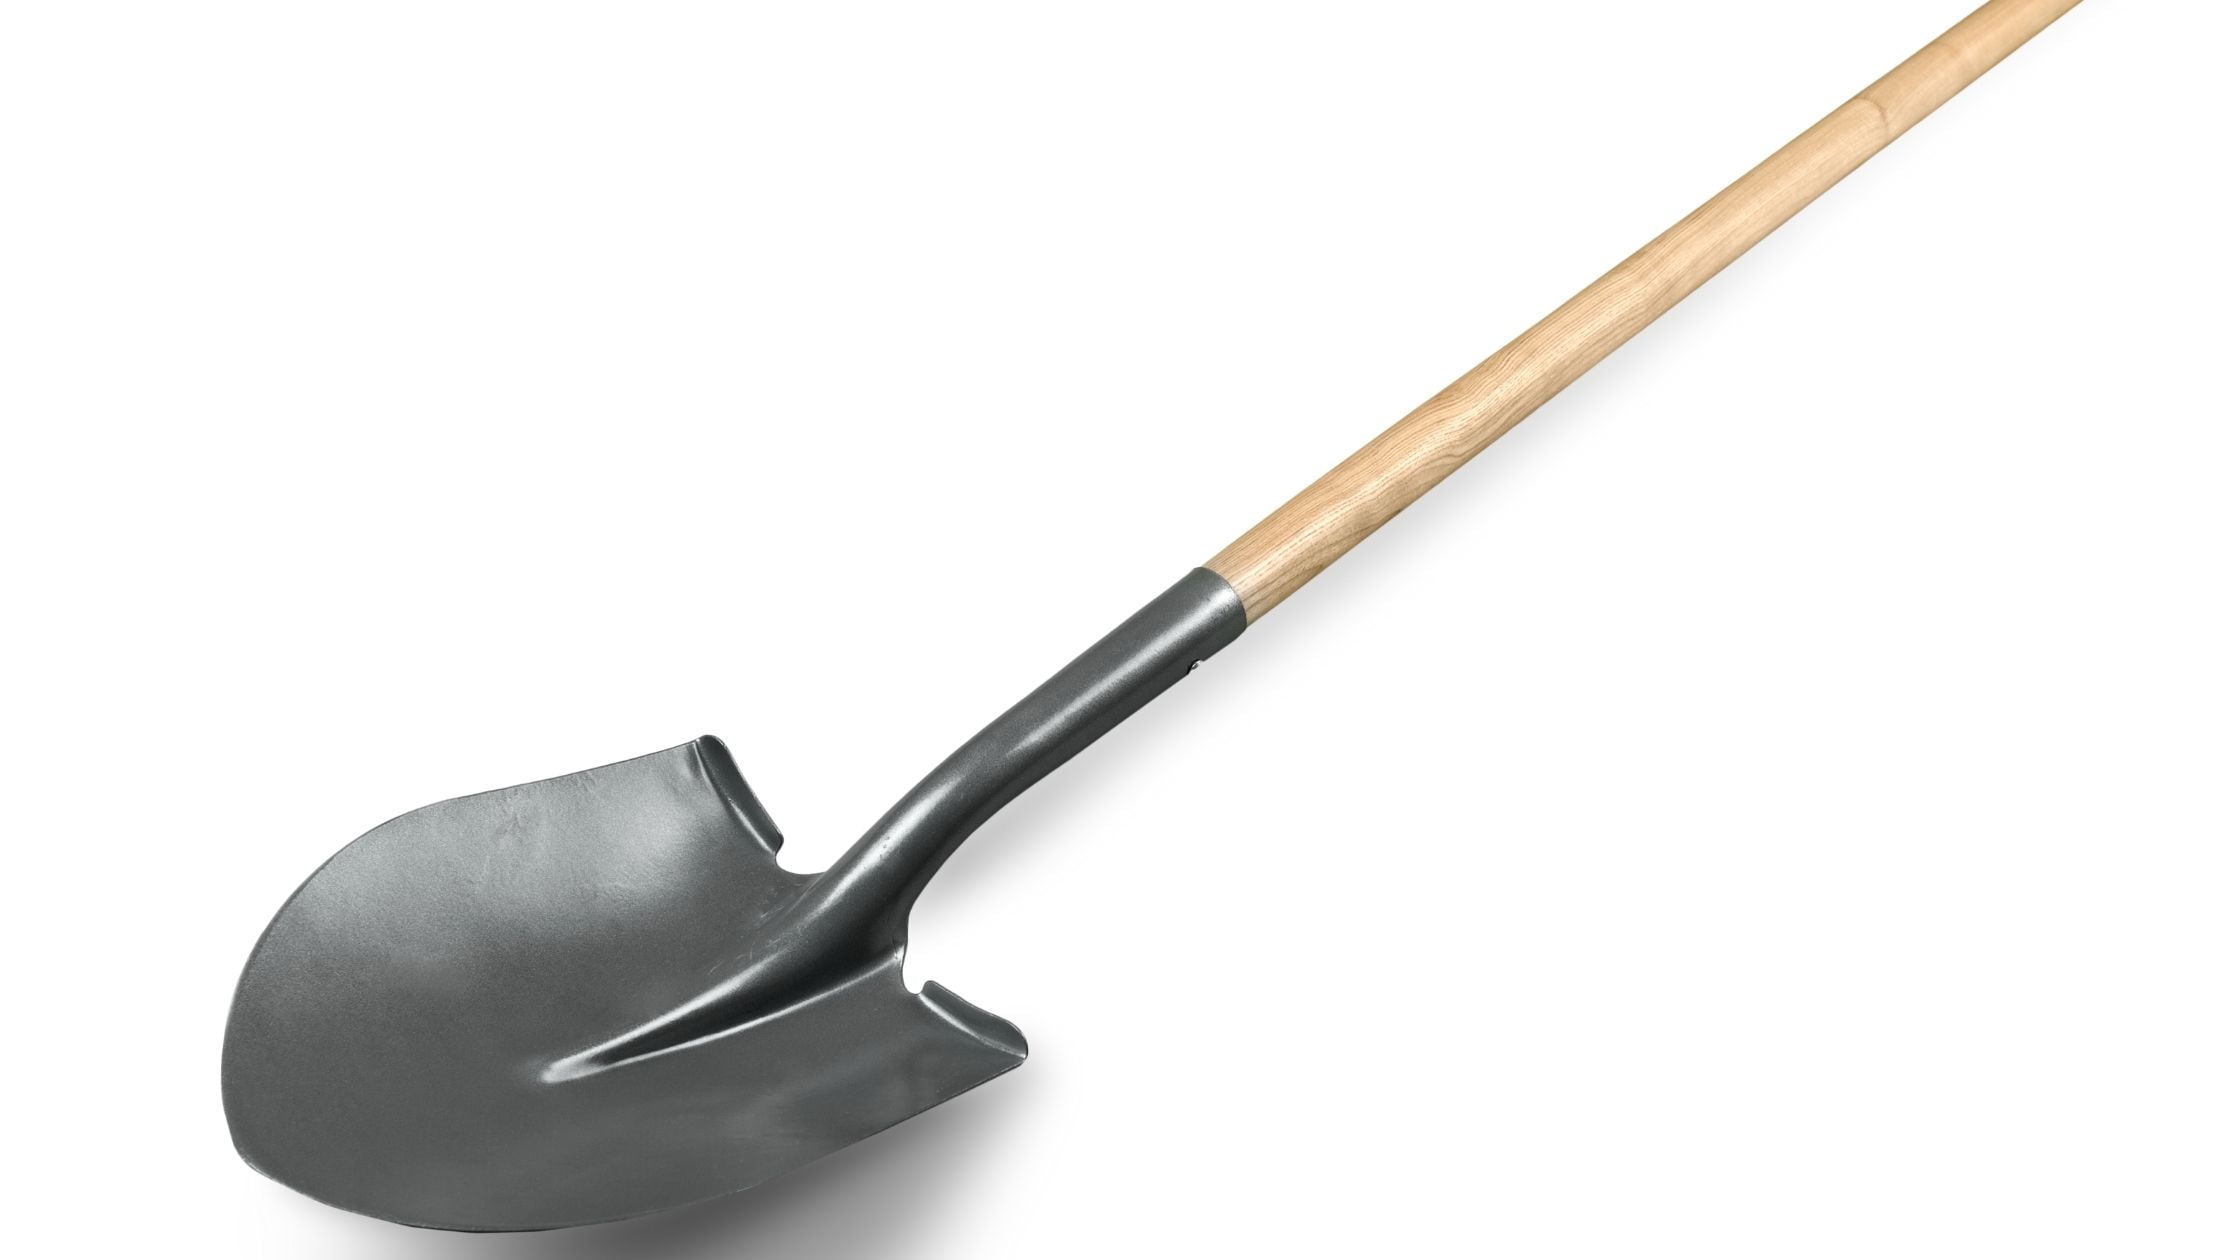 Types of shovels: pointed shovel